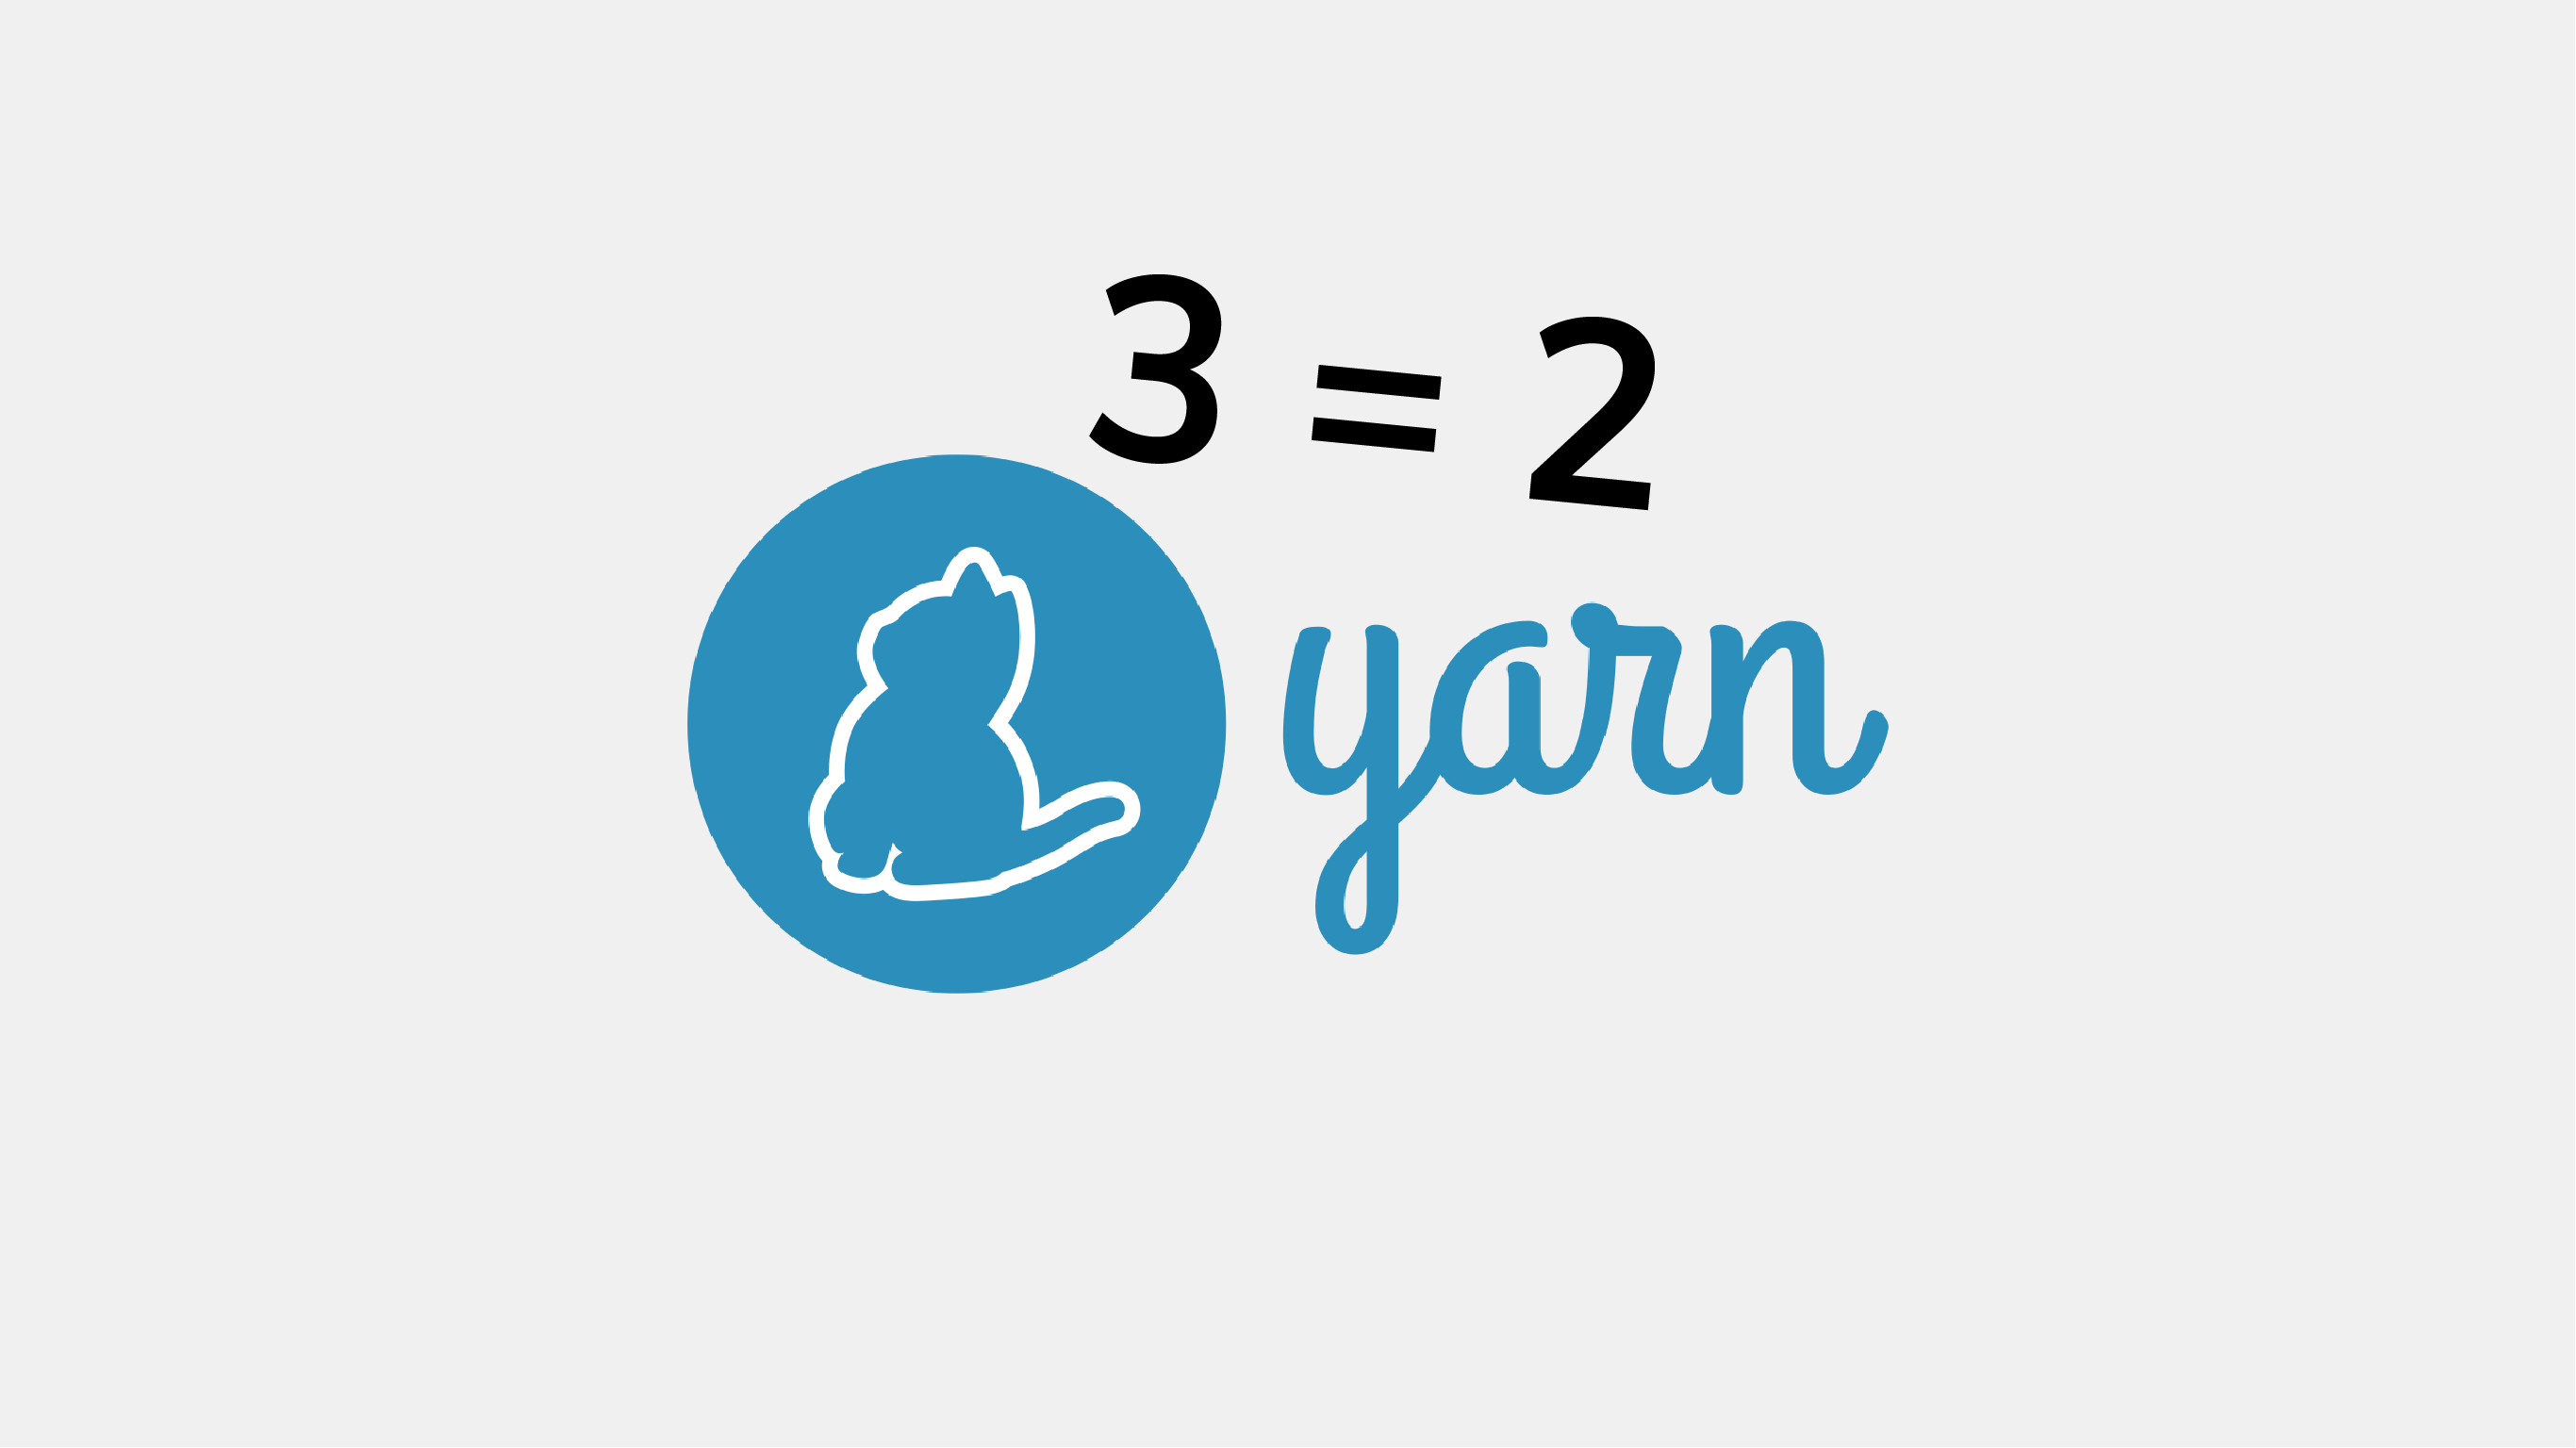 Why "Yarn 2" is actually Yarn 3